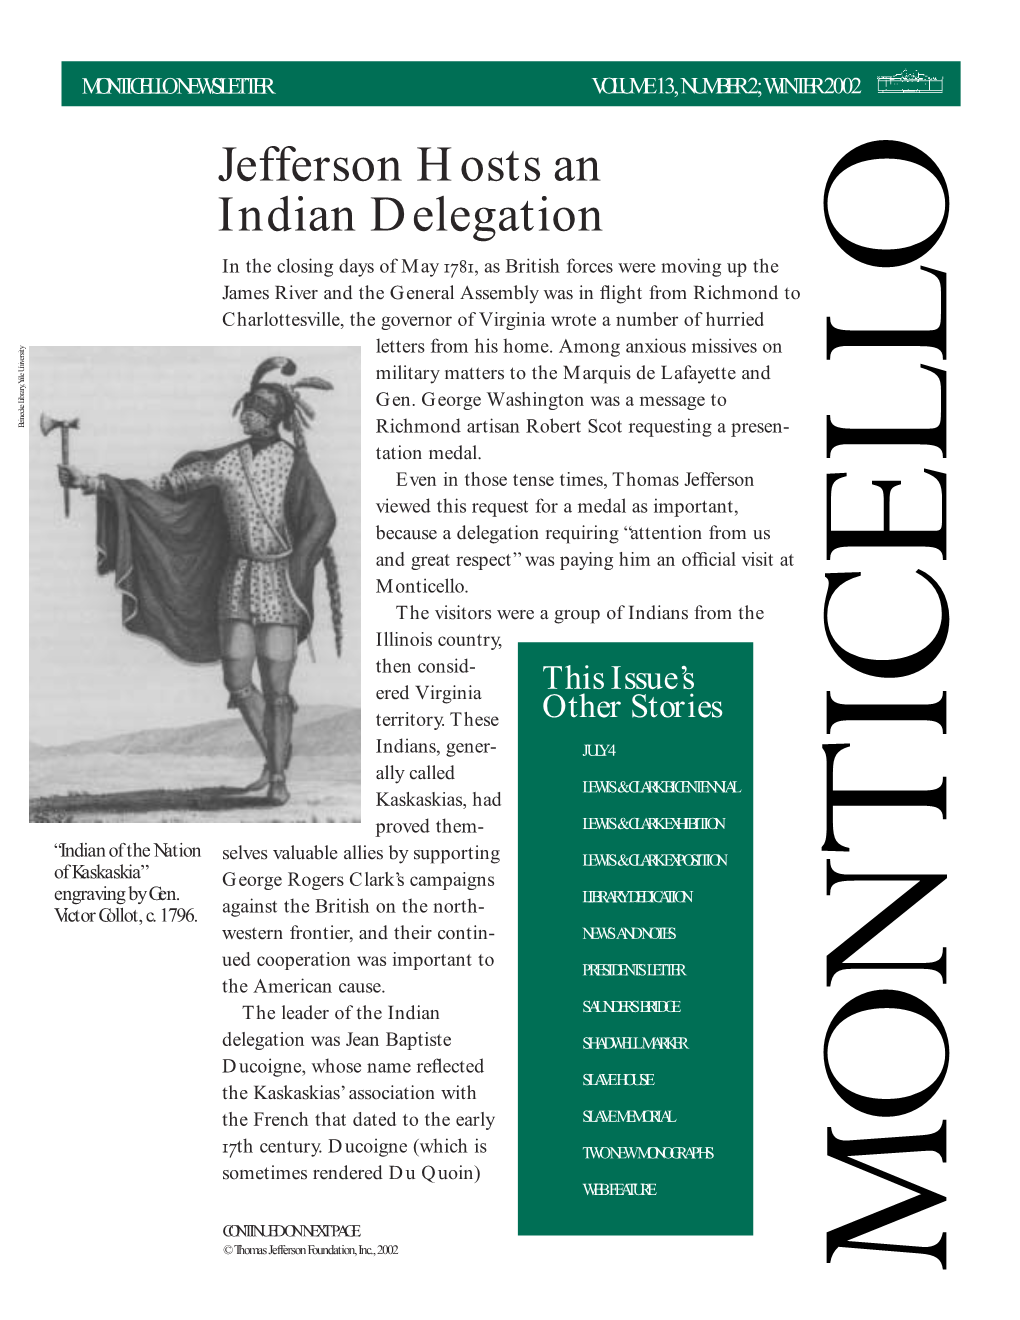 Jefferson Hosts an Indian Delegation